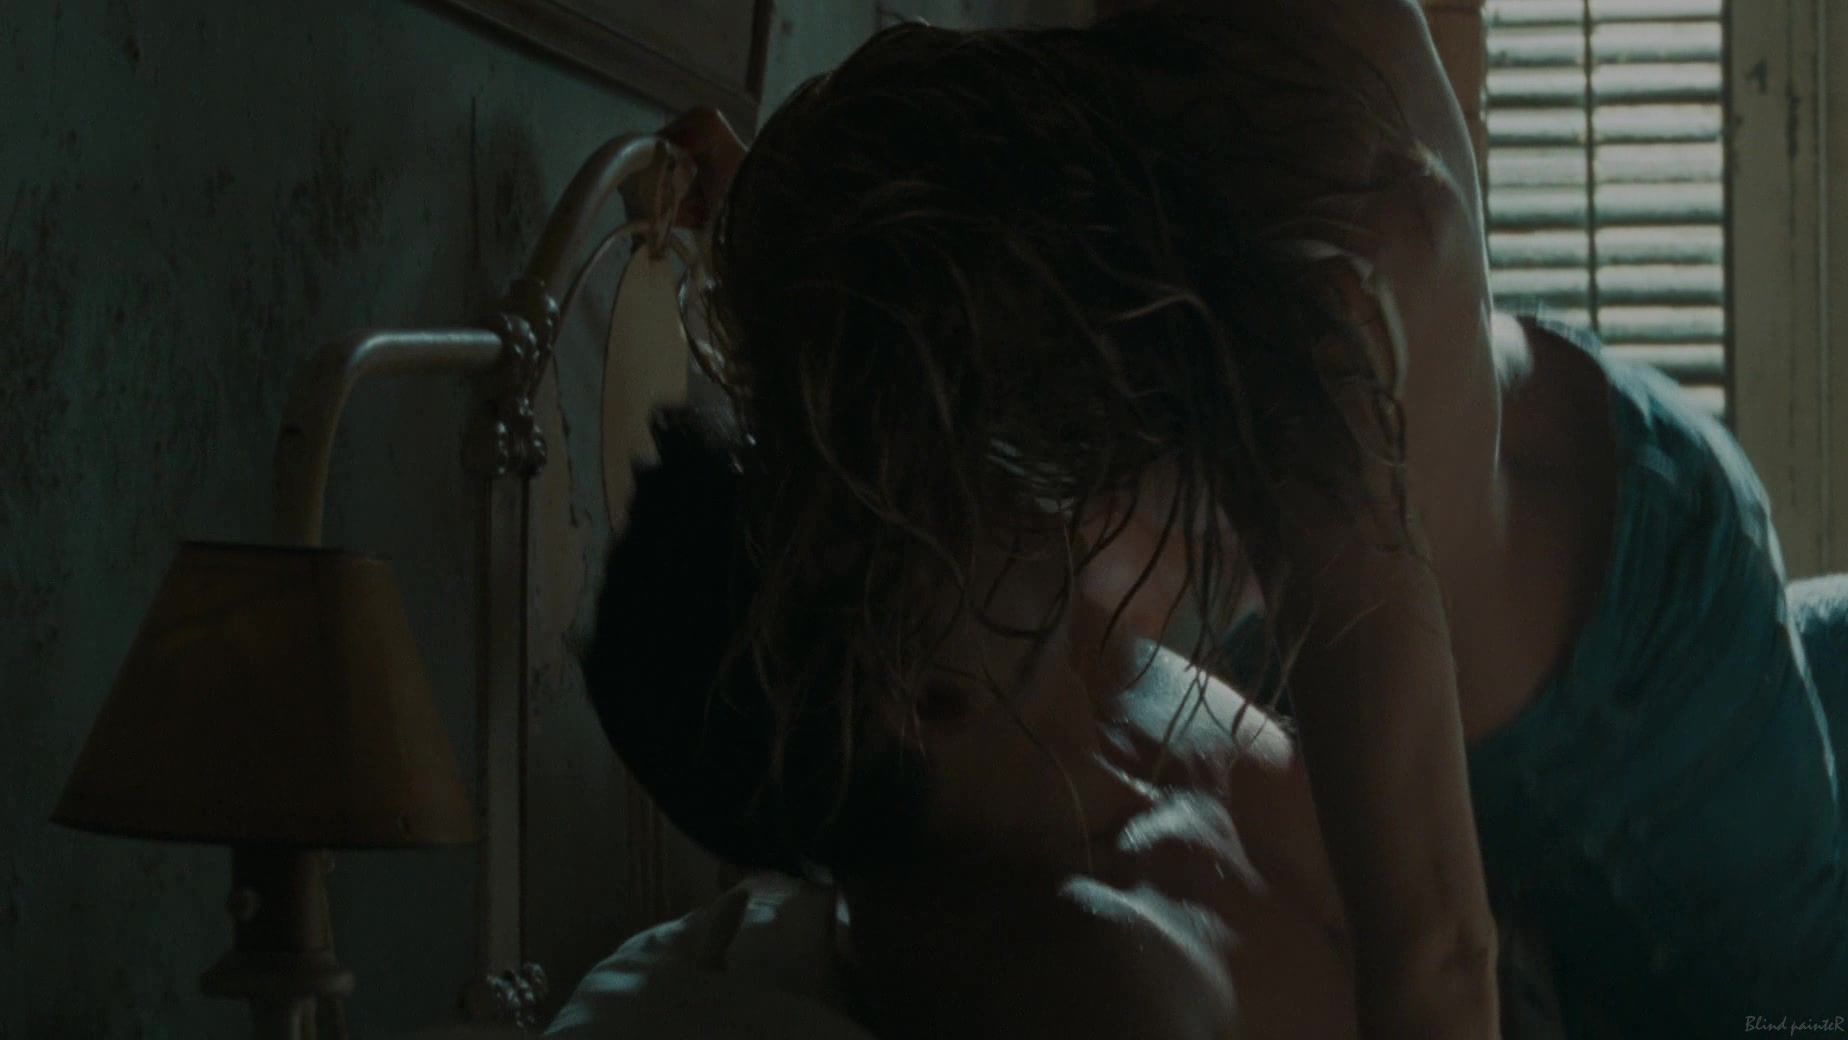 DateInAsia Sex video Amber Heard nude - The Rum Diary (2011) Free Rough Sex